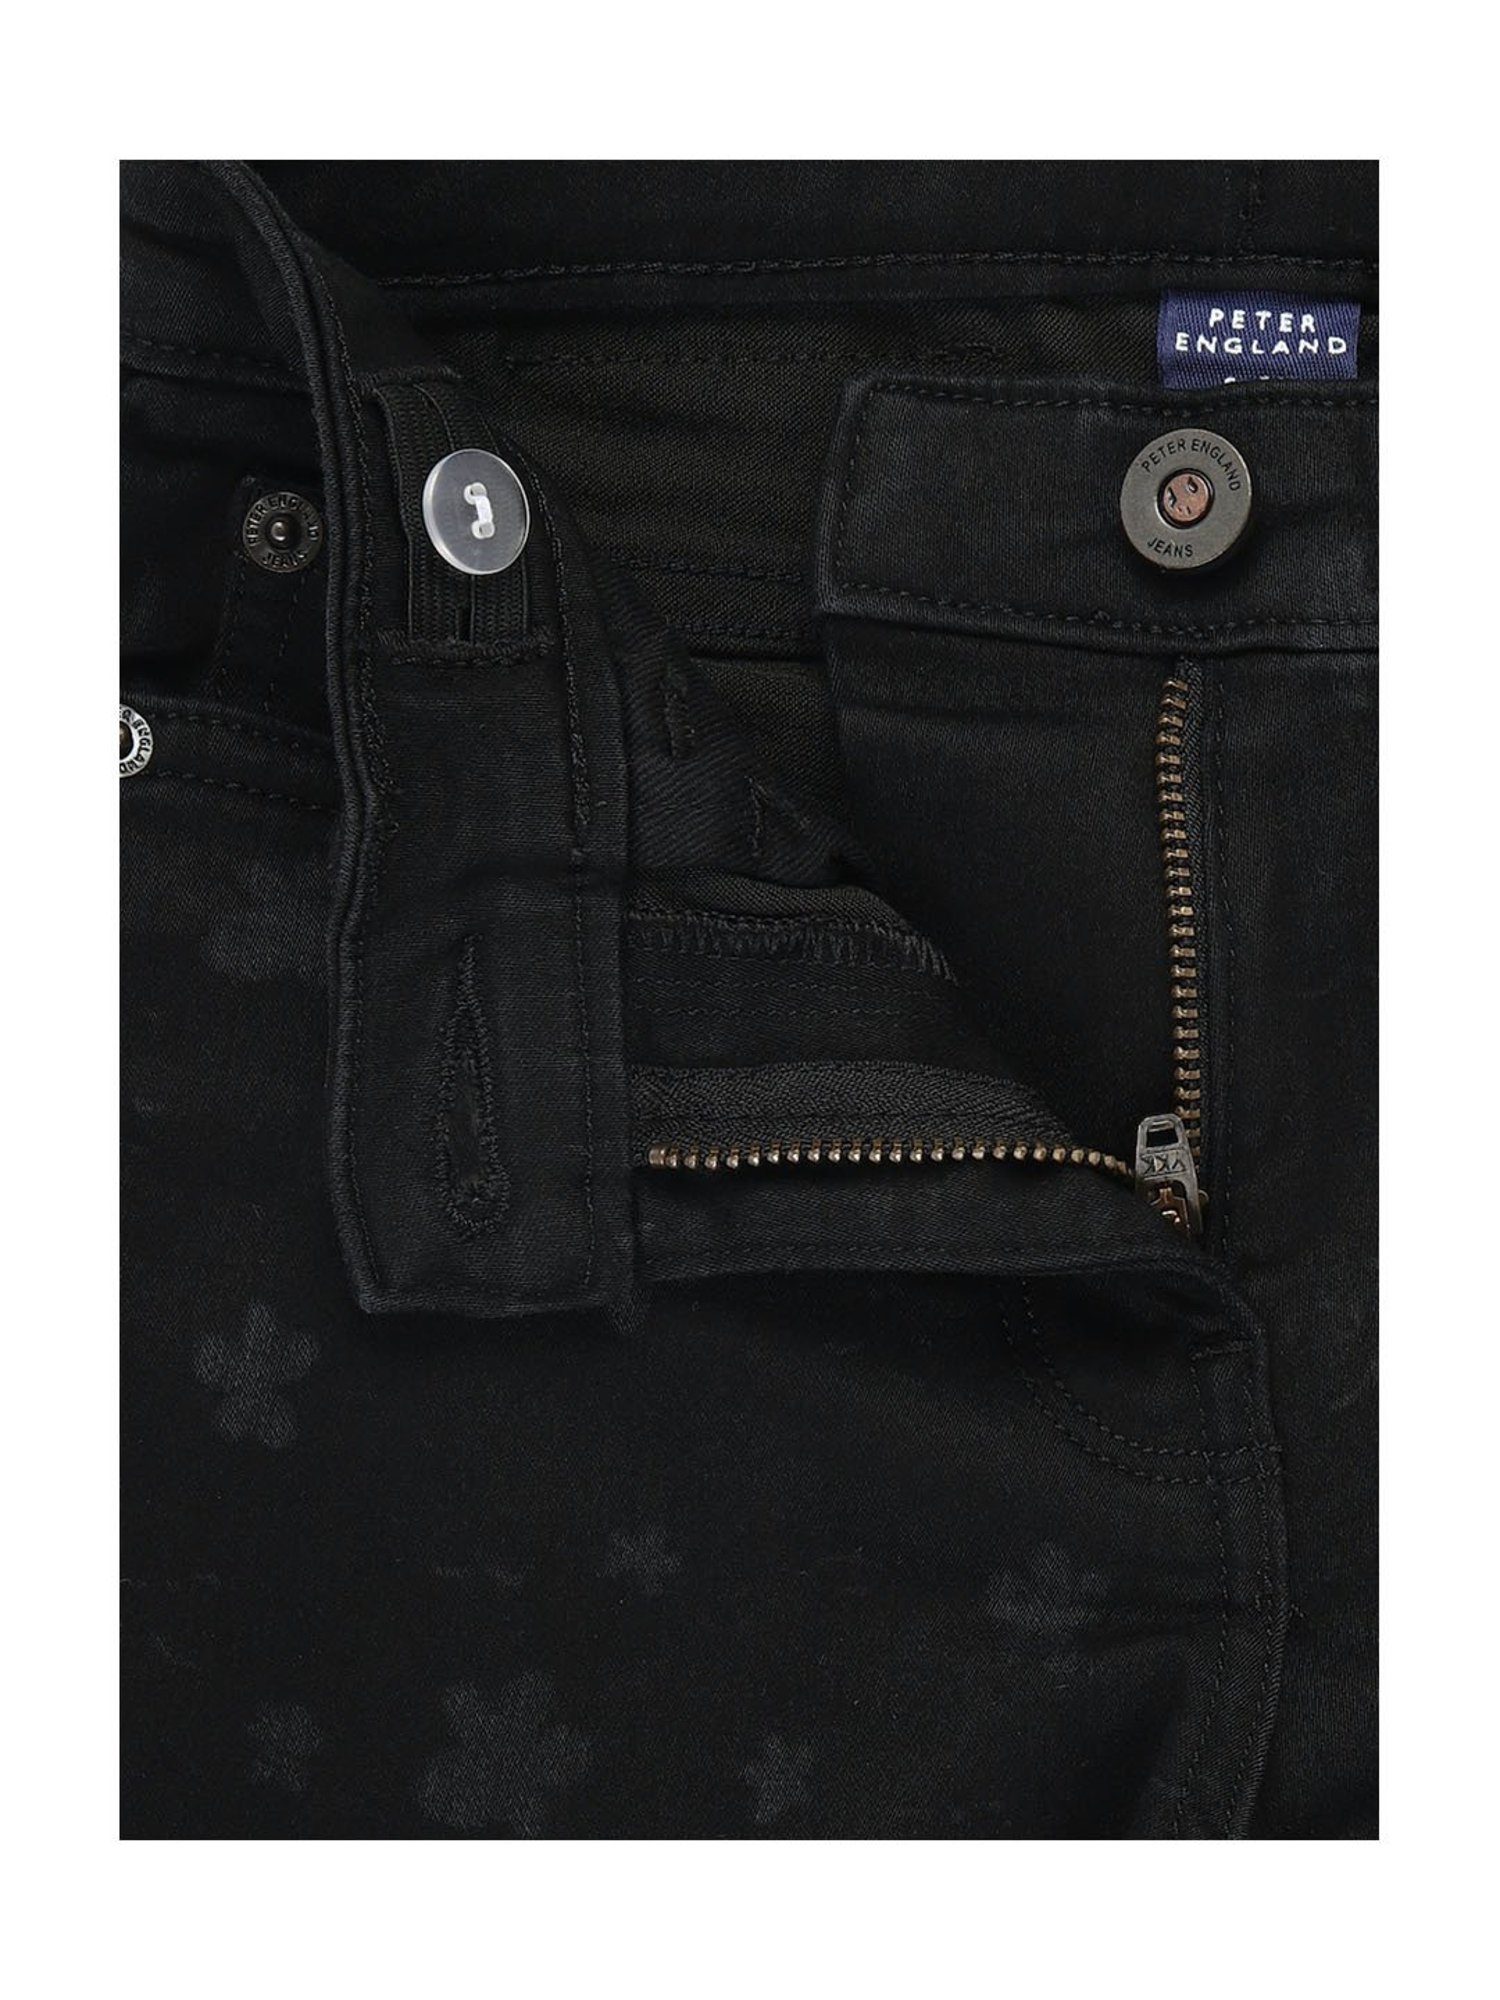 PETER ENGLAND Slim Men Black Jeans - Buy PETER ENGLAND Slim Men Black Jeans  Online at Best Prices in India | Flipkart.com